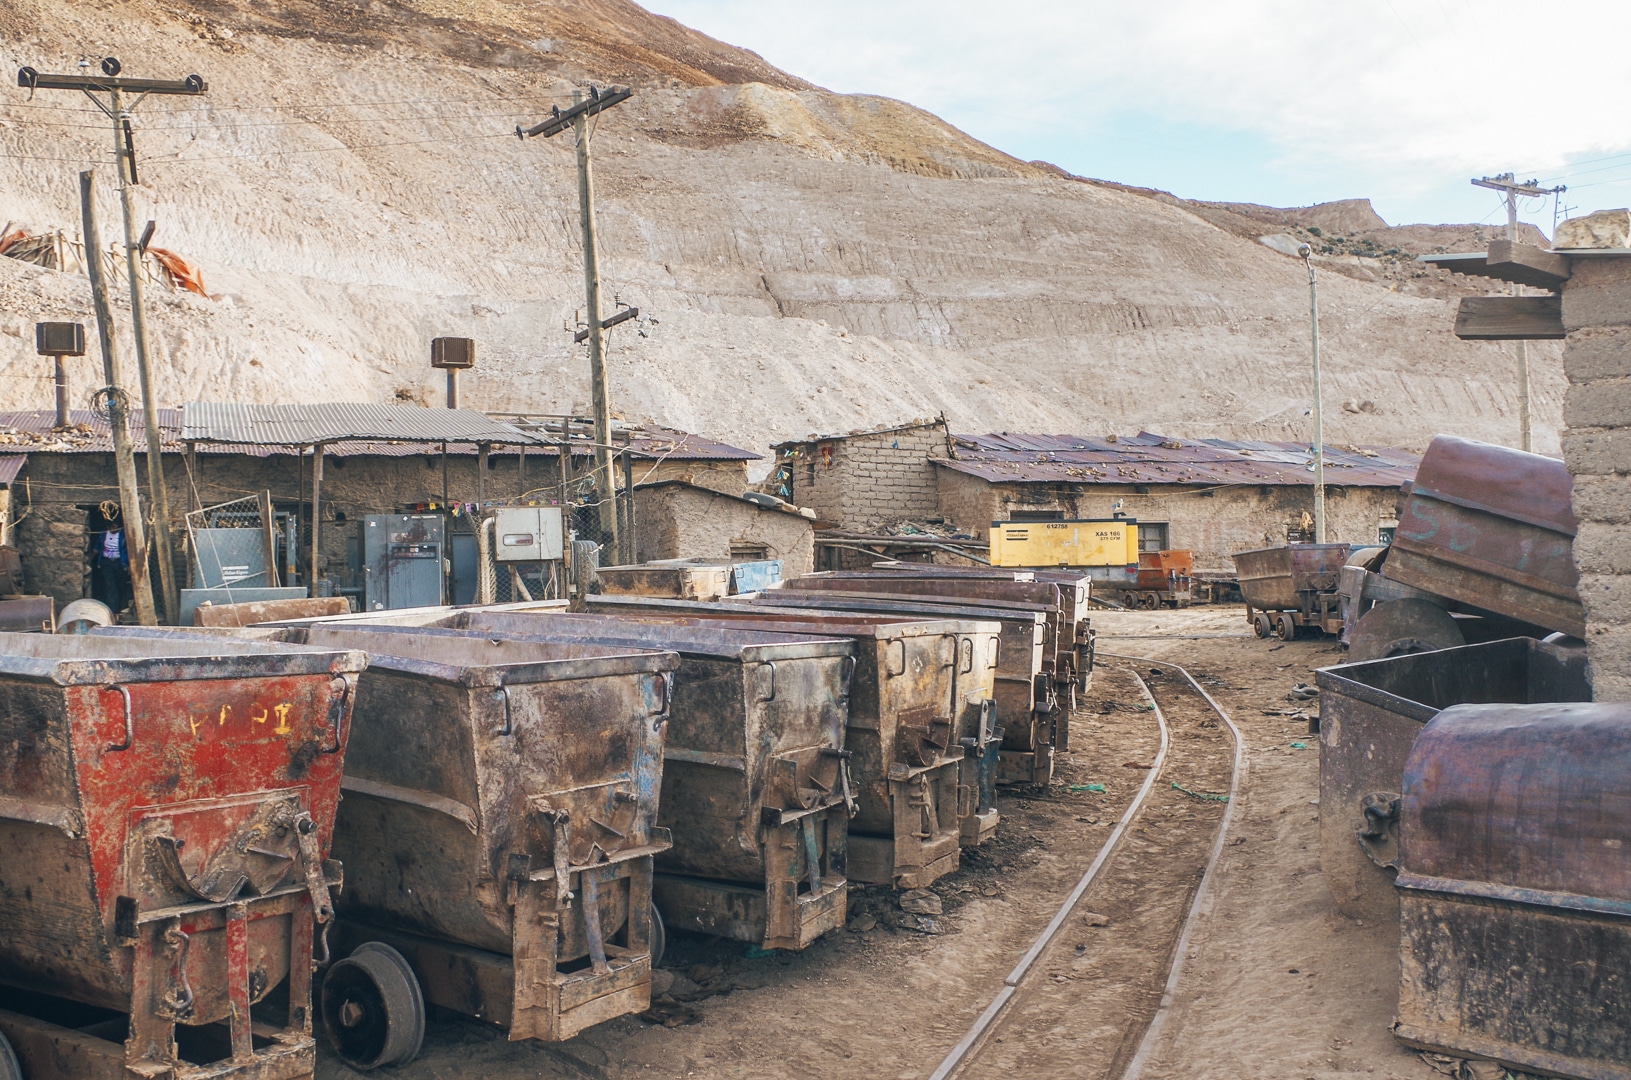 équipement des mineurs Cerro Rico Bolivie potosi argent 